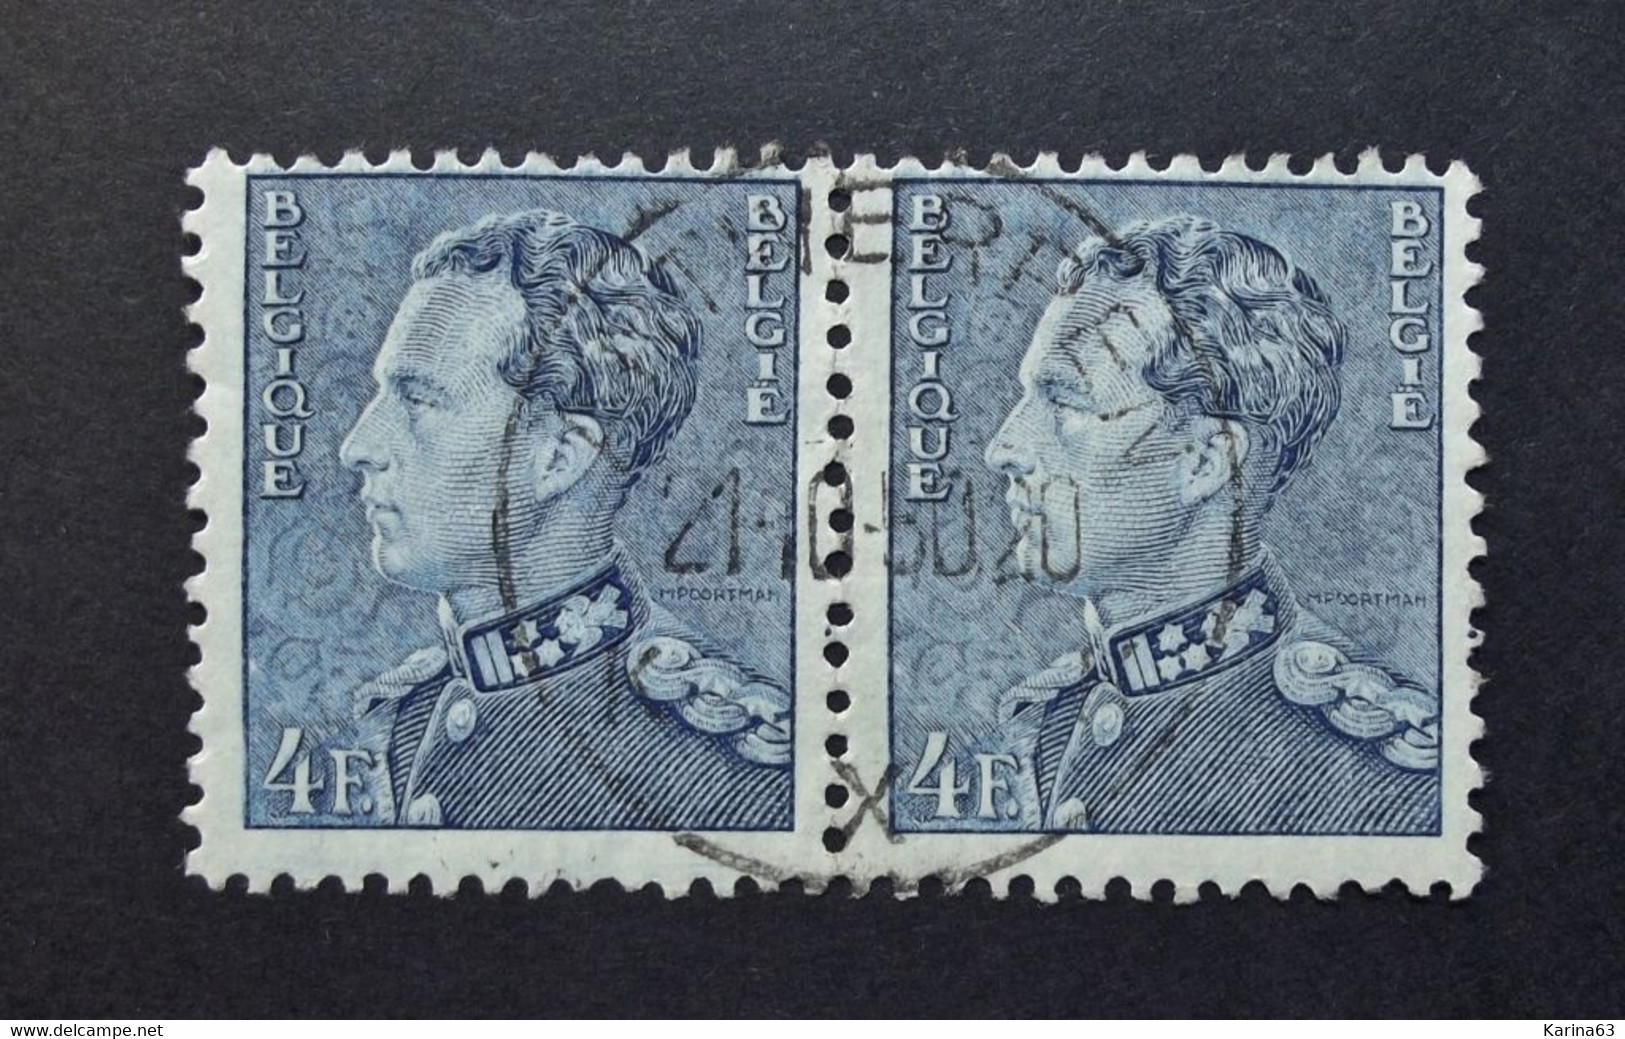 Belgie Belgique - 1950 - OPB/COB  N° 833  (2 Value) - Koning Leopold III  Poortman Obl. -  Antwerpen X . - Oblitérés